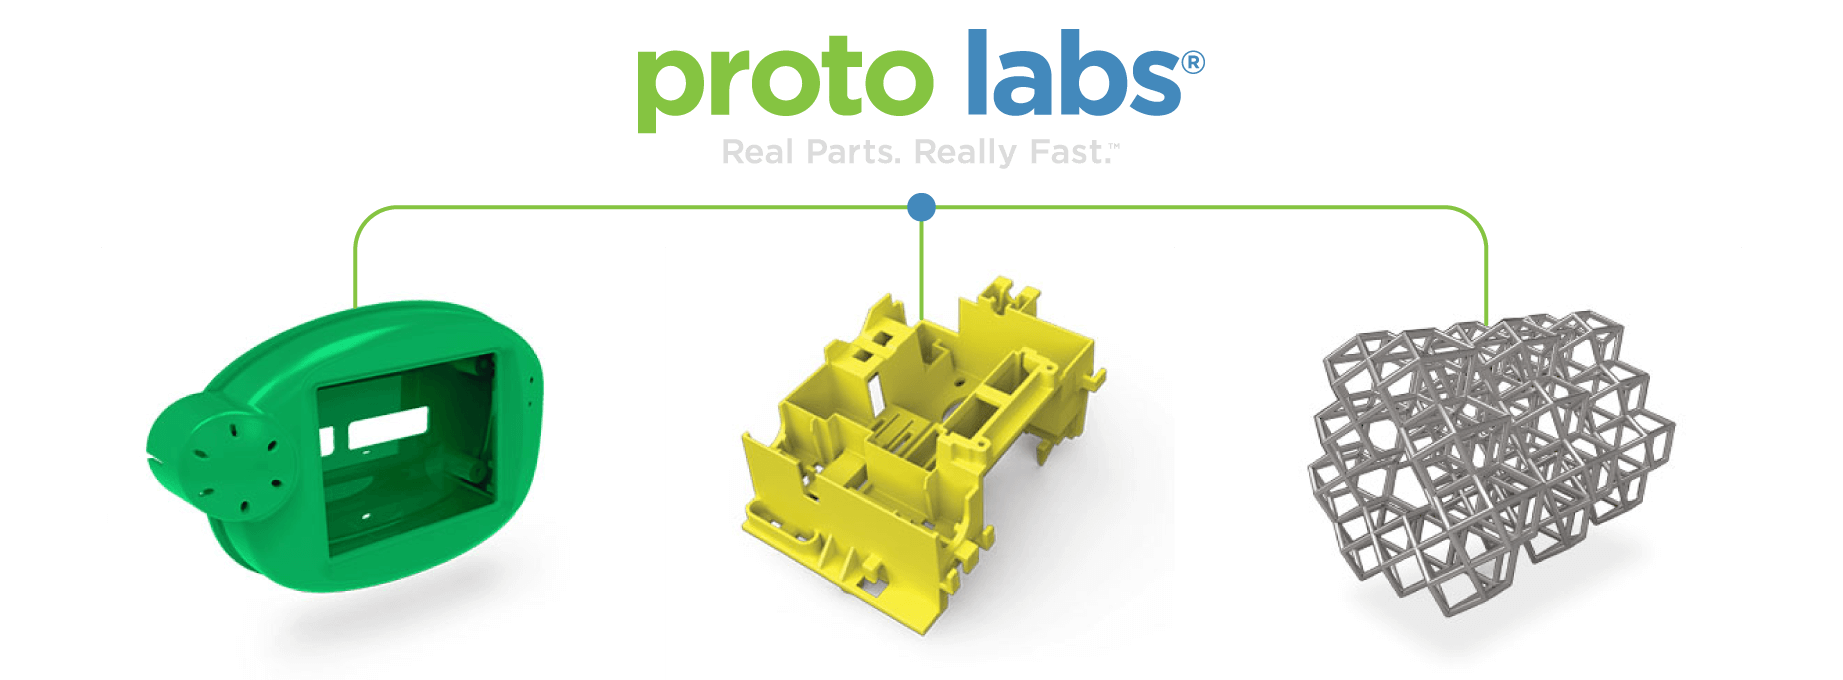 Protolabs | Prototype manufacturing